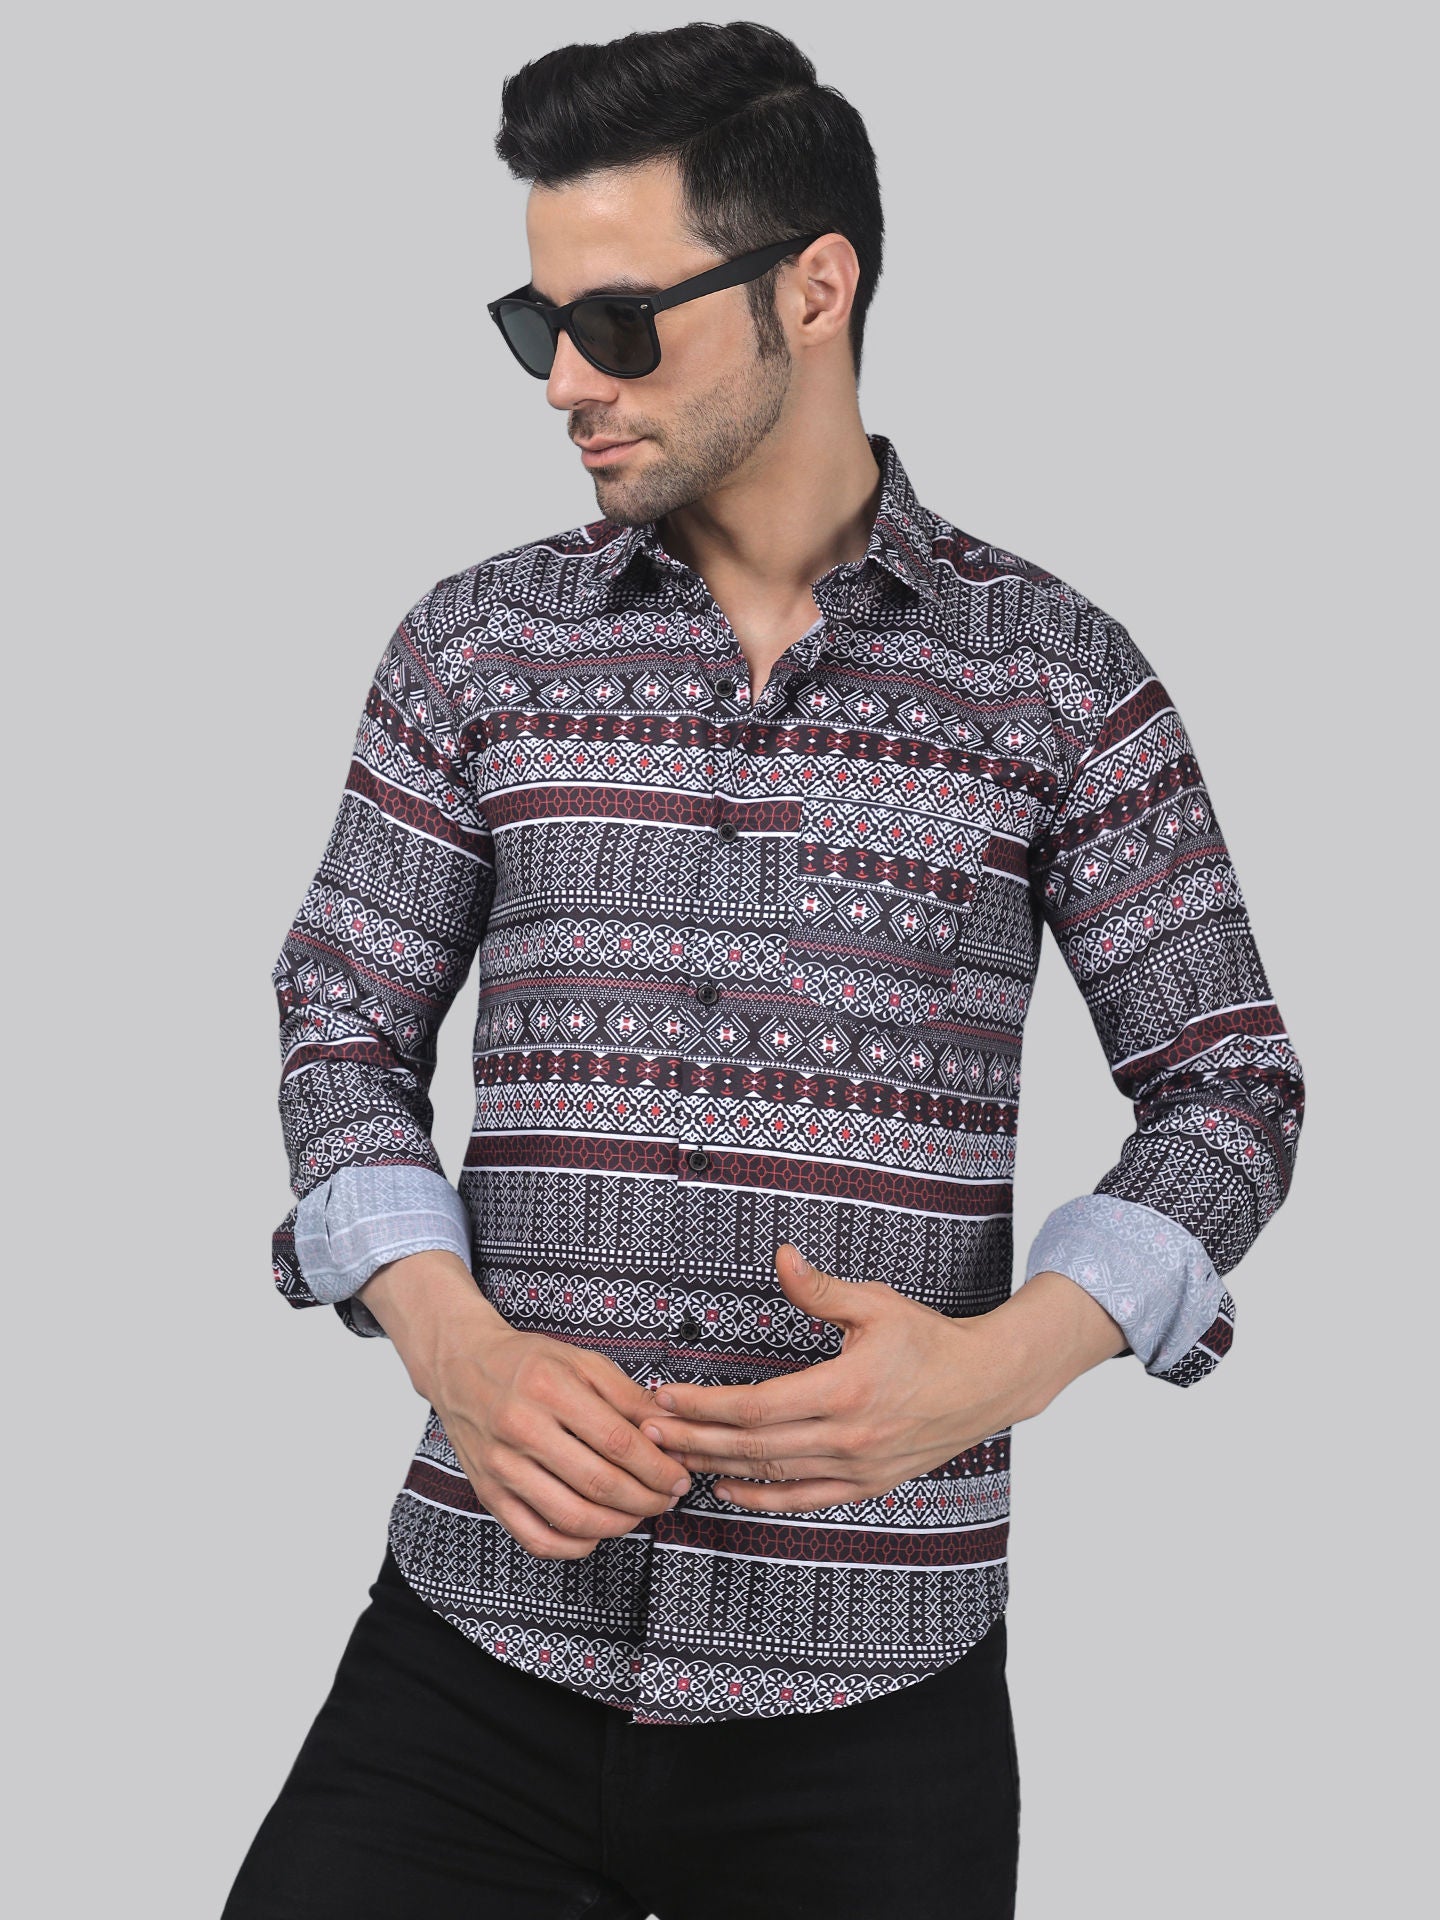 TryBuy Men's Stylish Sensational Linen Casual Printed Full Sleeves Shirt - TryBuy® USA🇺🇸